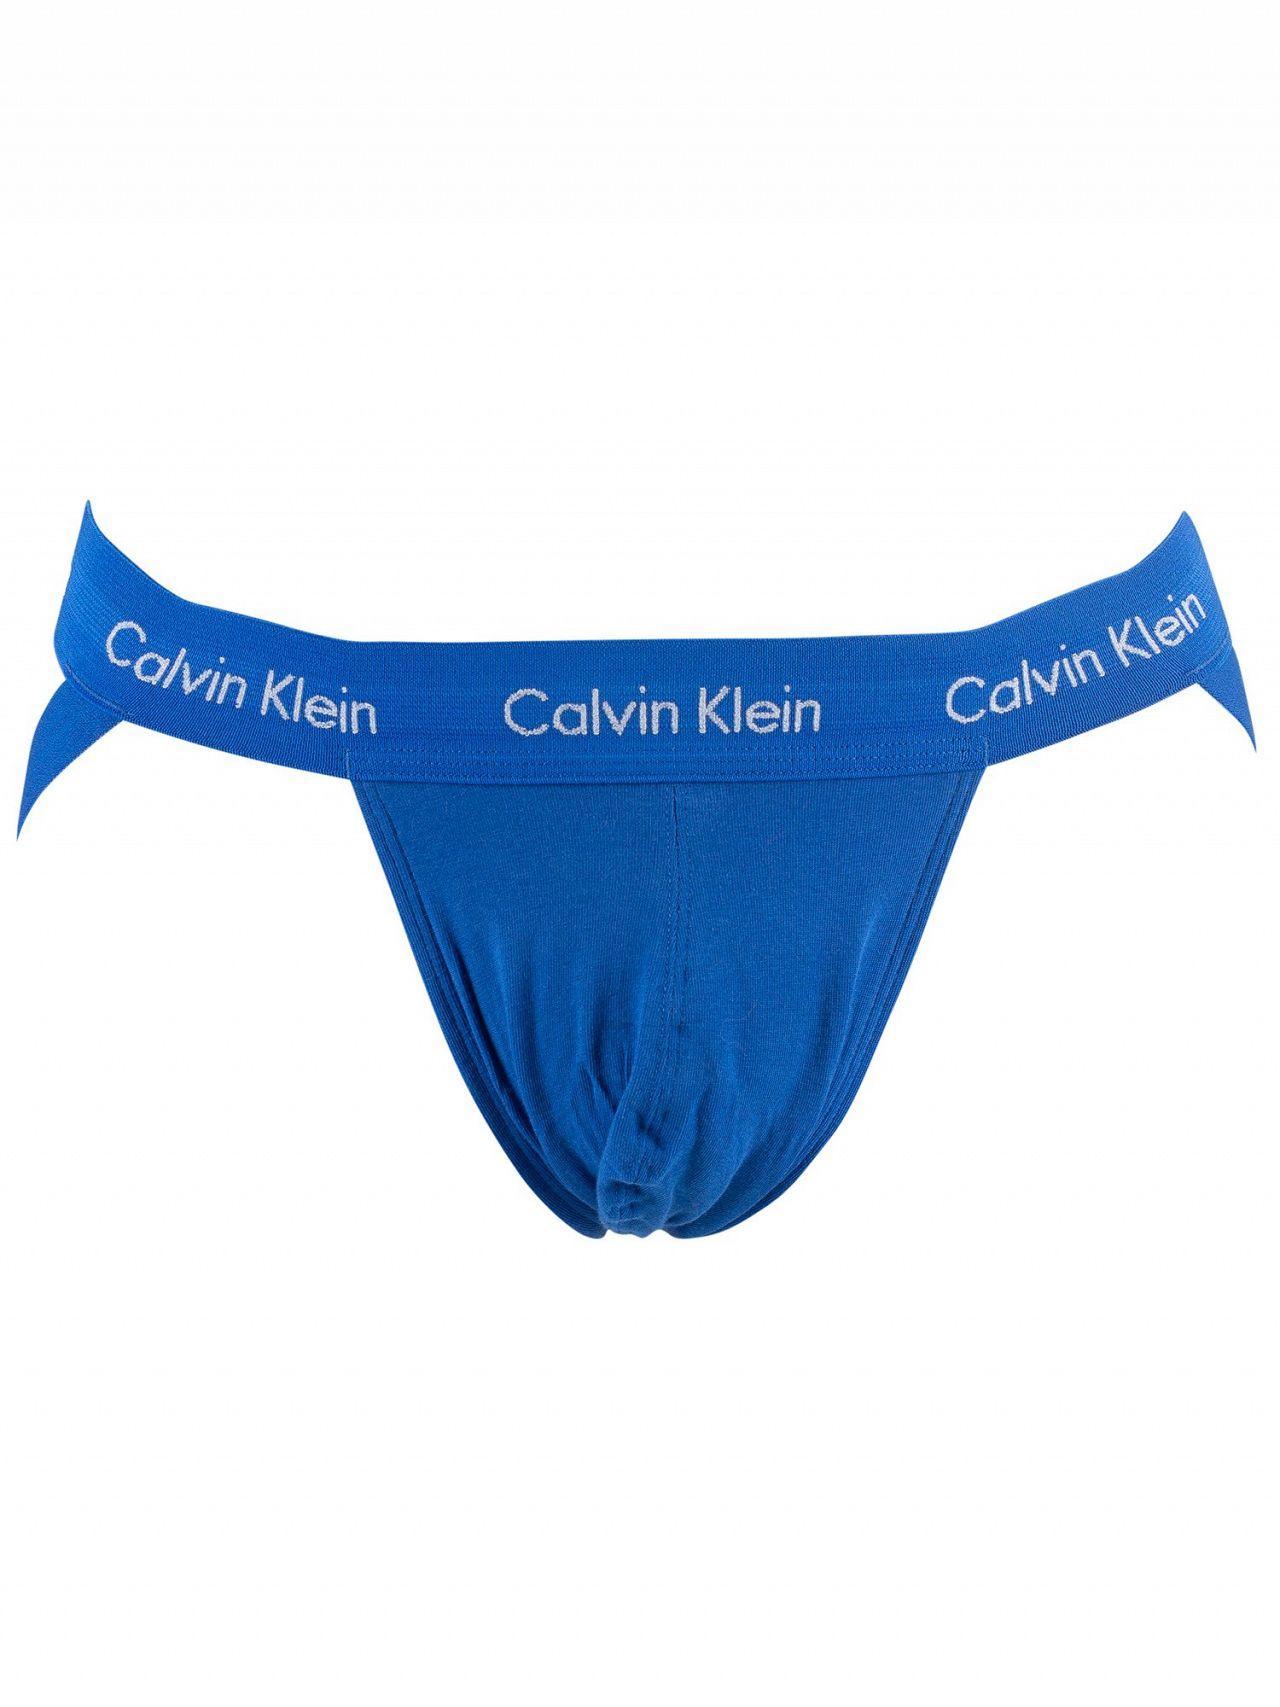 Calvin Klein Pride Colours 5 Pack Jockstraps for Men